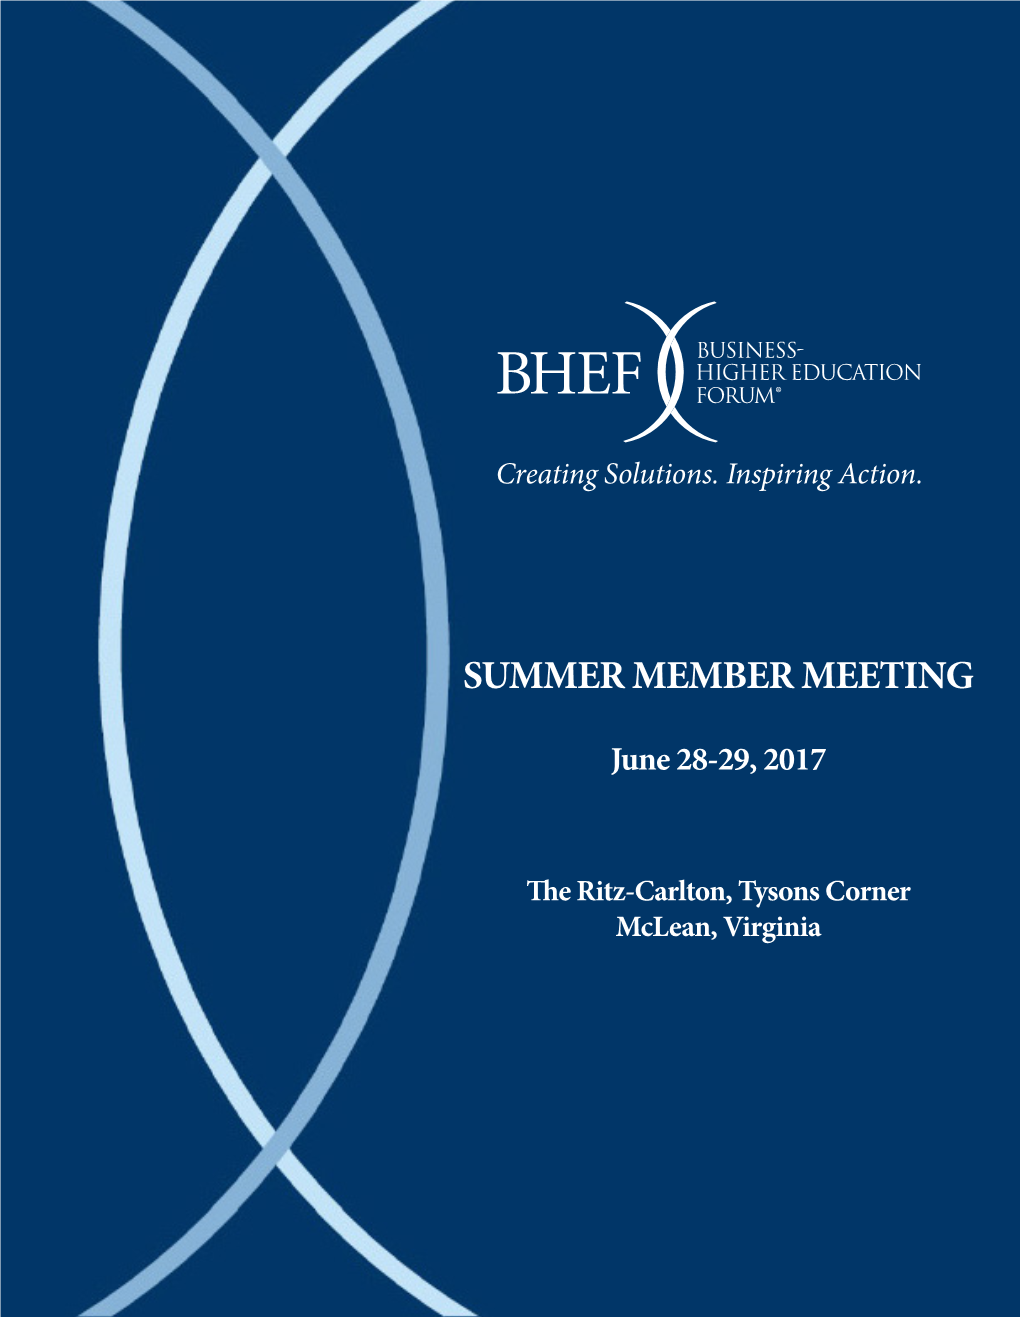 Summer Member Meeting